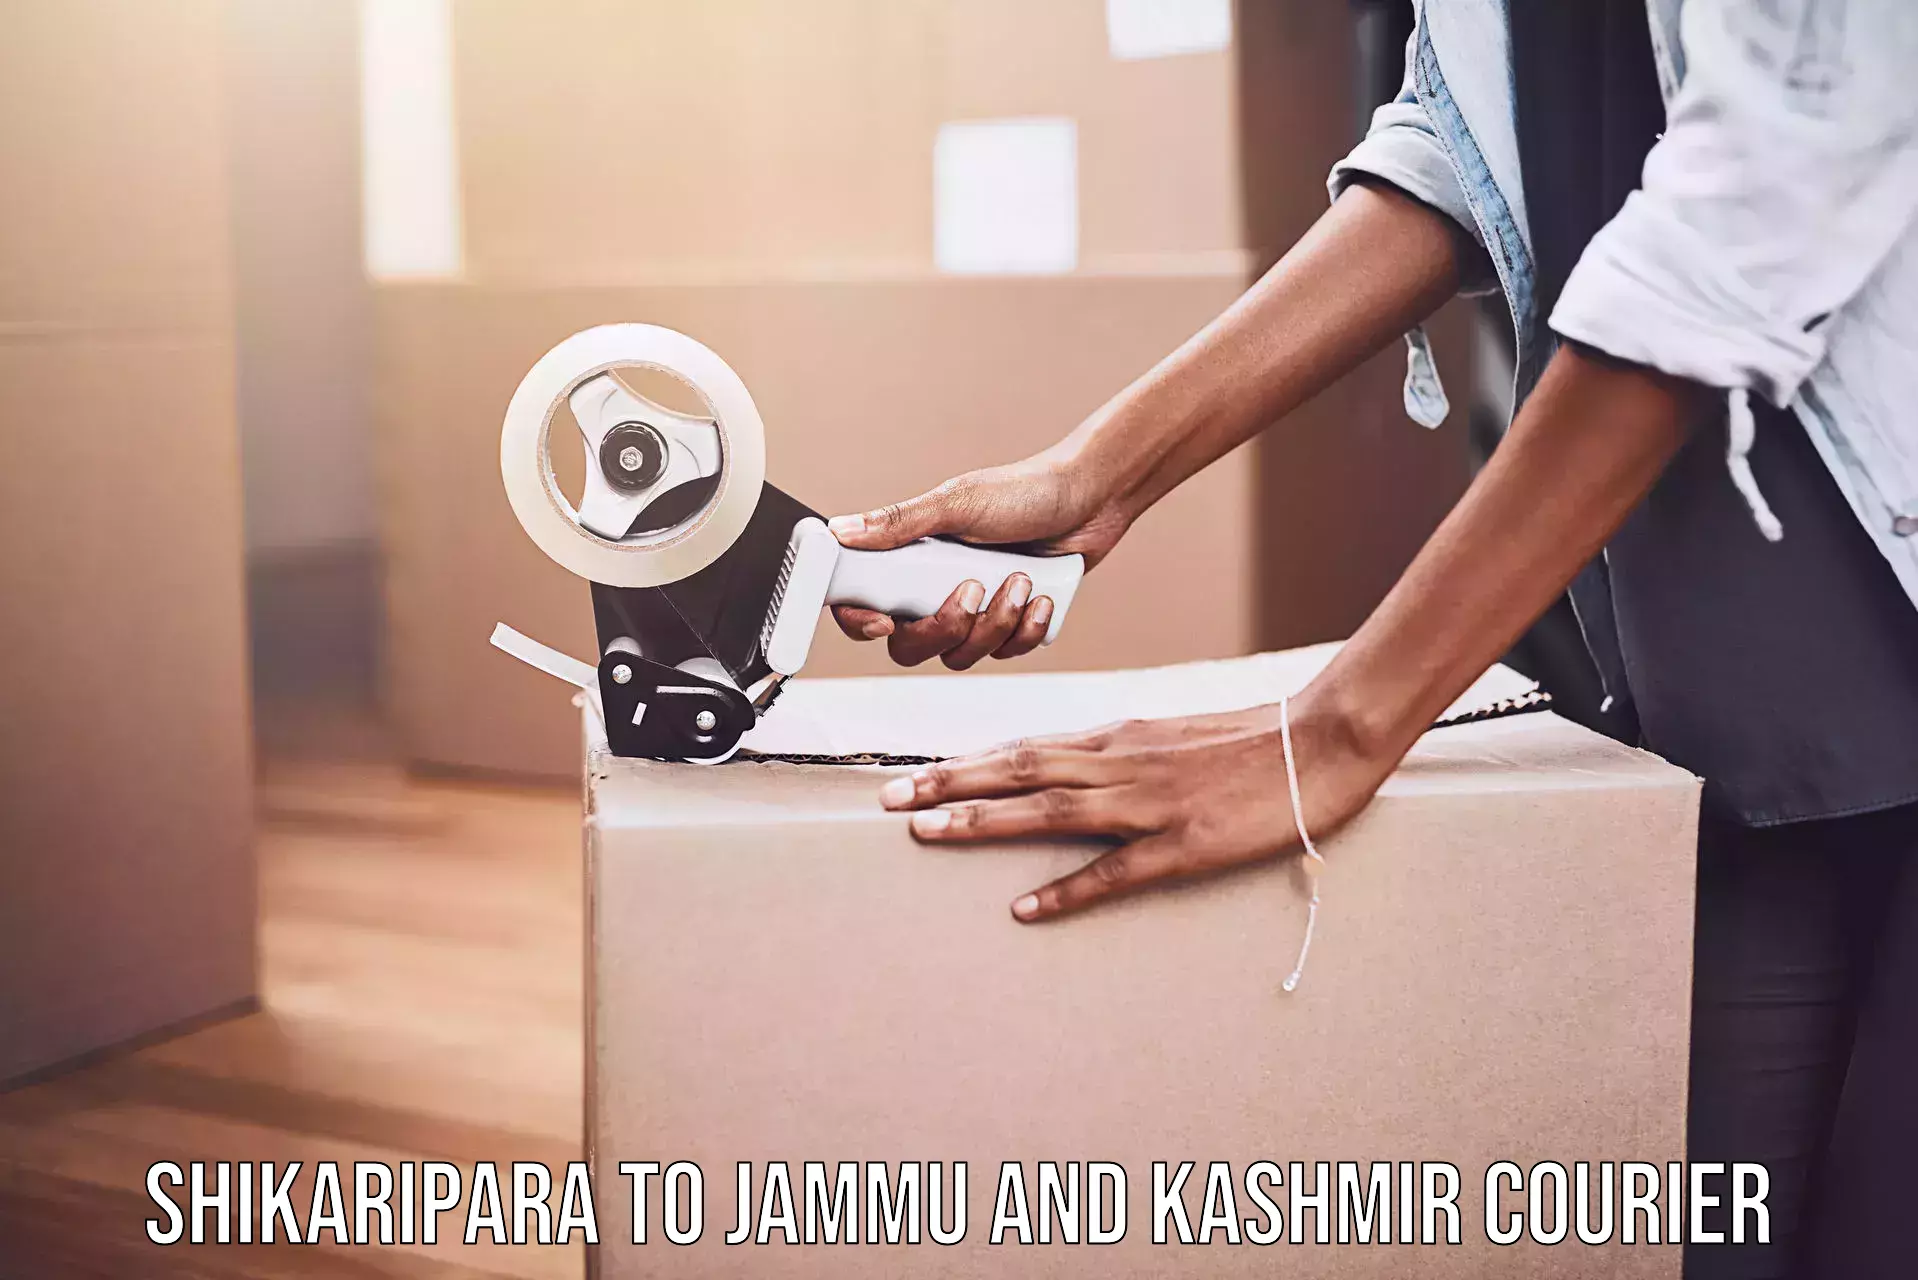 24/7 courier service Shikaripara to University of Jammu